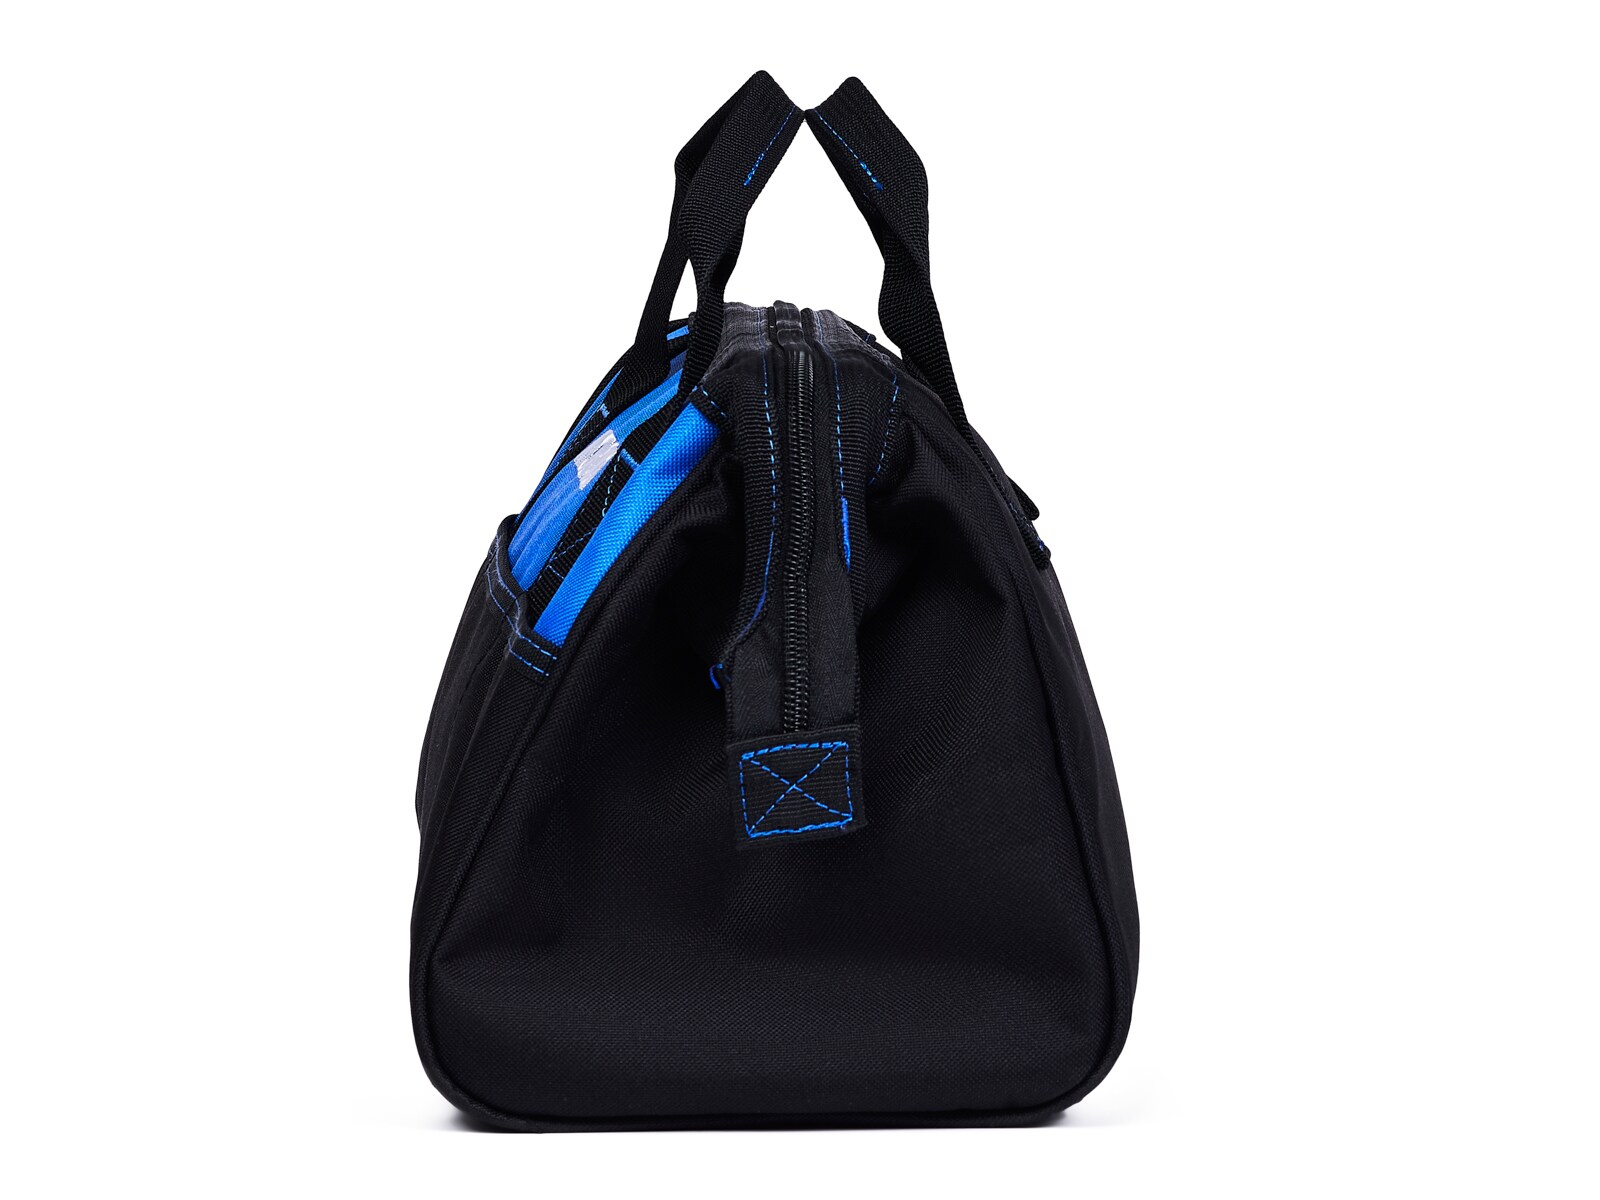 Kobalt Black/Blue Polyester 12-in Tool Bag in the Tool Bags department ...